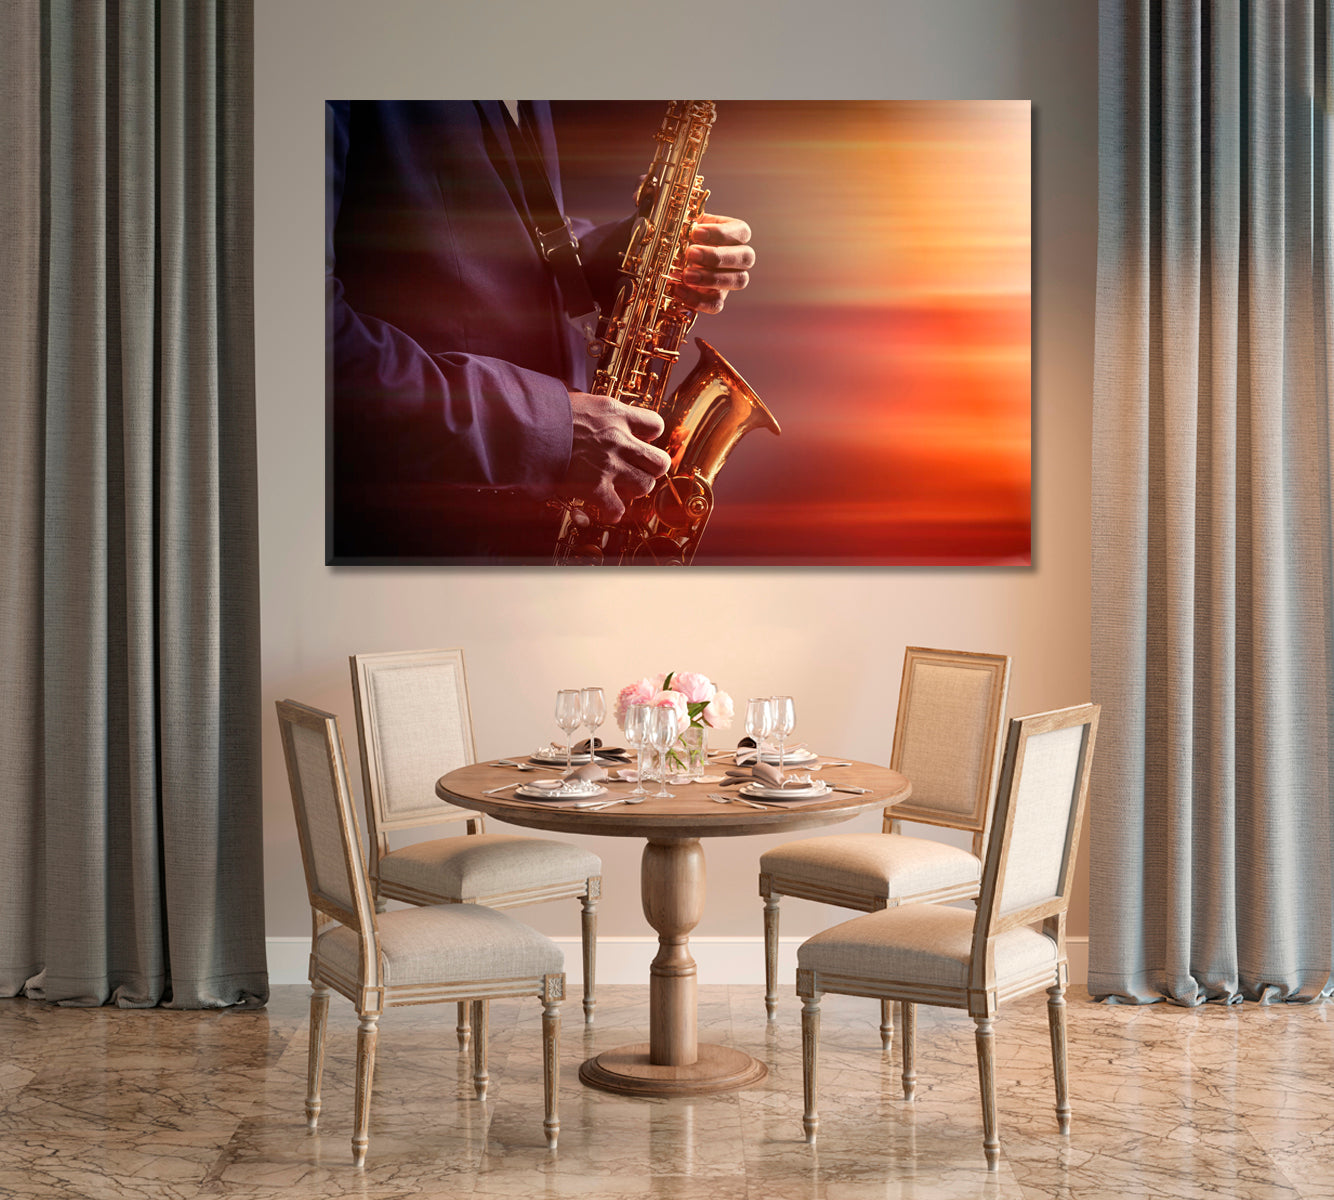 African American Jazz Musician Playing Saxophone Canvas Print-Canvas Print-CetArt-1 Panel-24x16 inches-CetArt